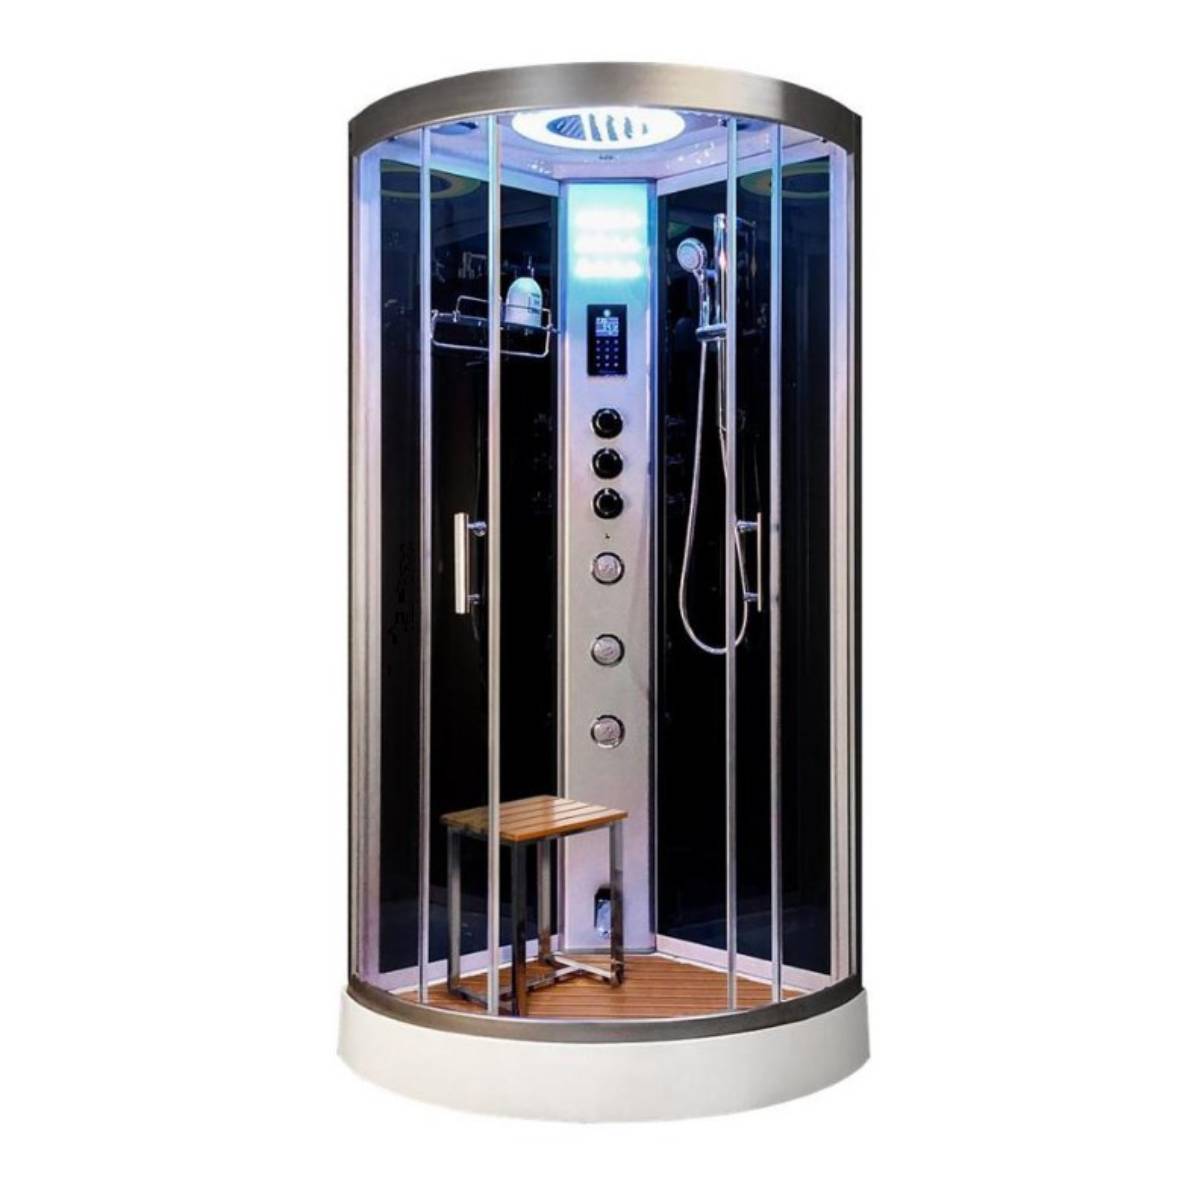 Vidalux Essence 900mm Steam Shower Enclosure - Black (11502)